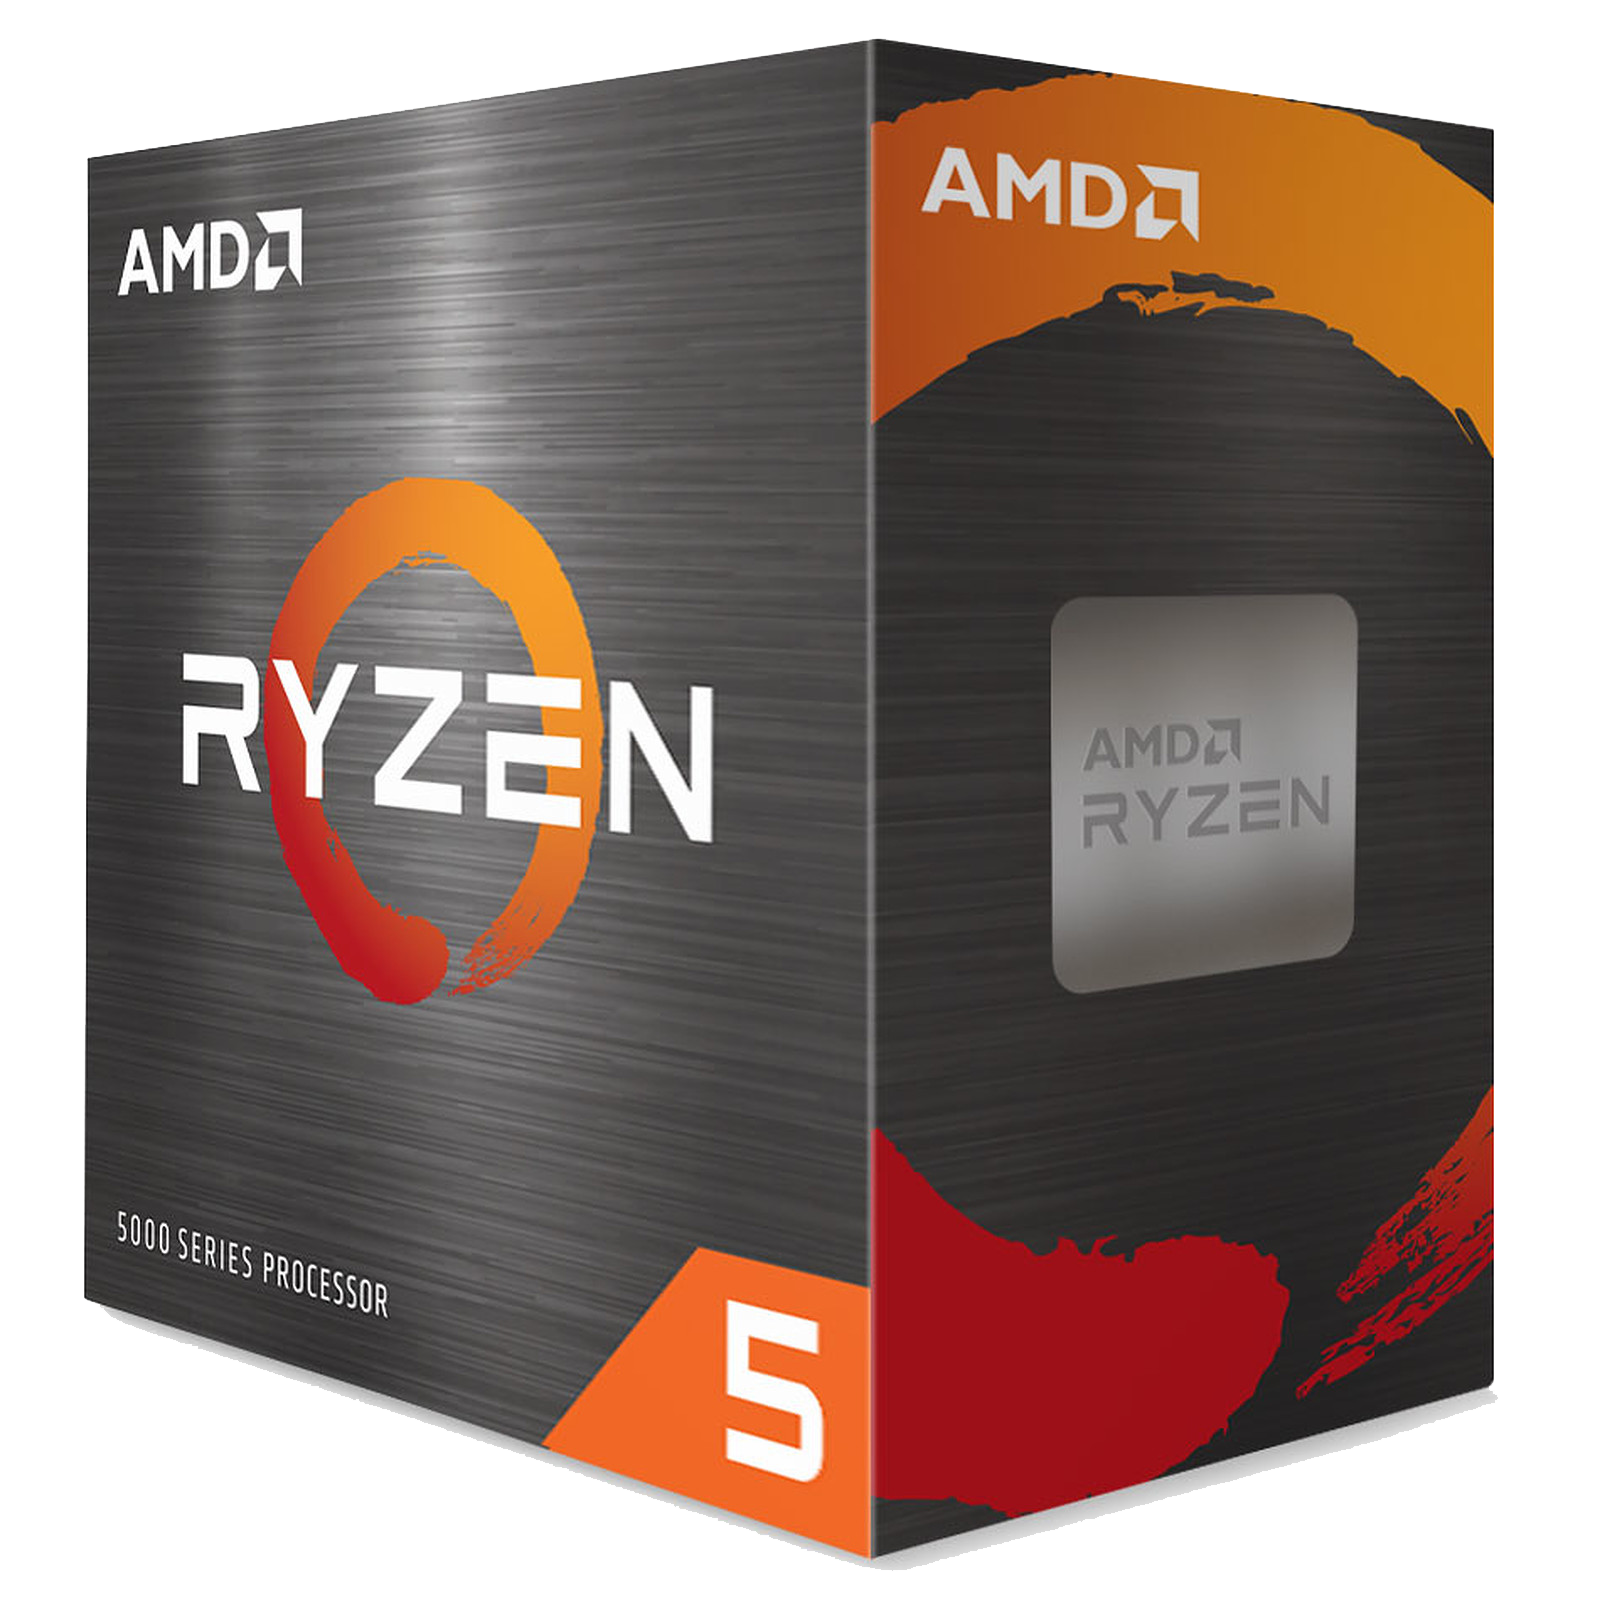 AMD Ryzen 5 3600 - Âgé mais robuste !